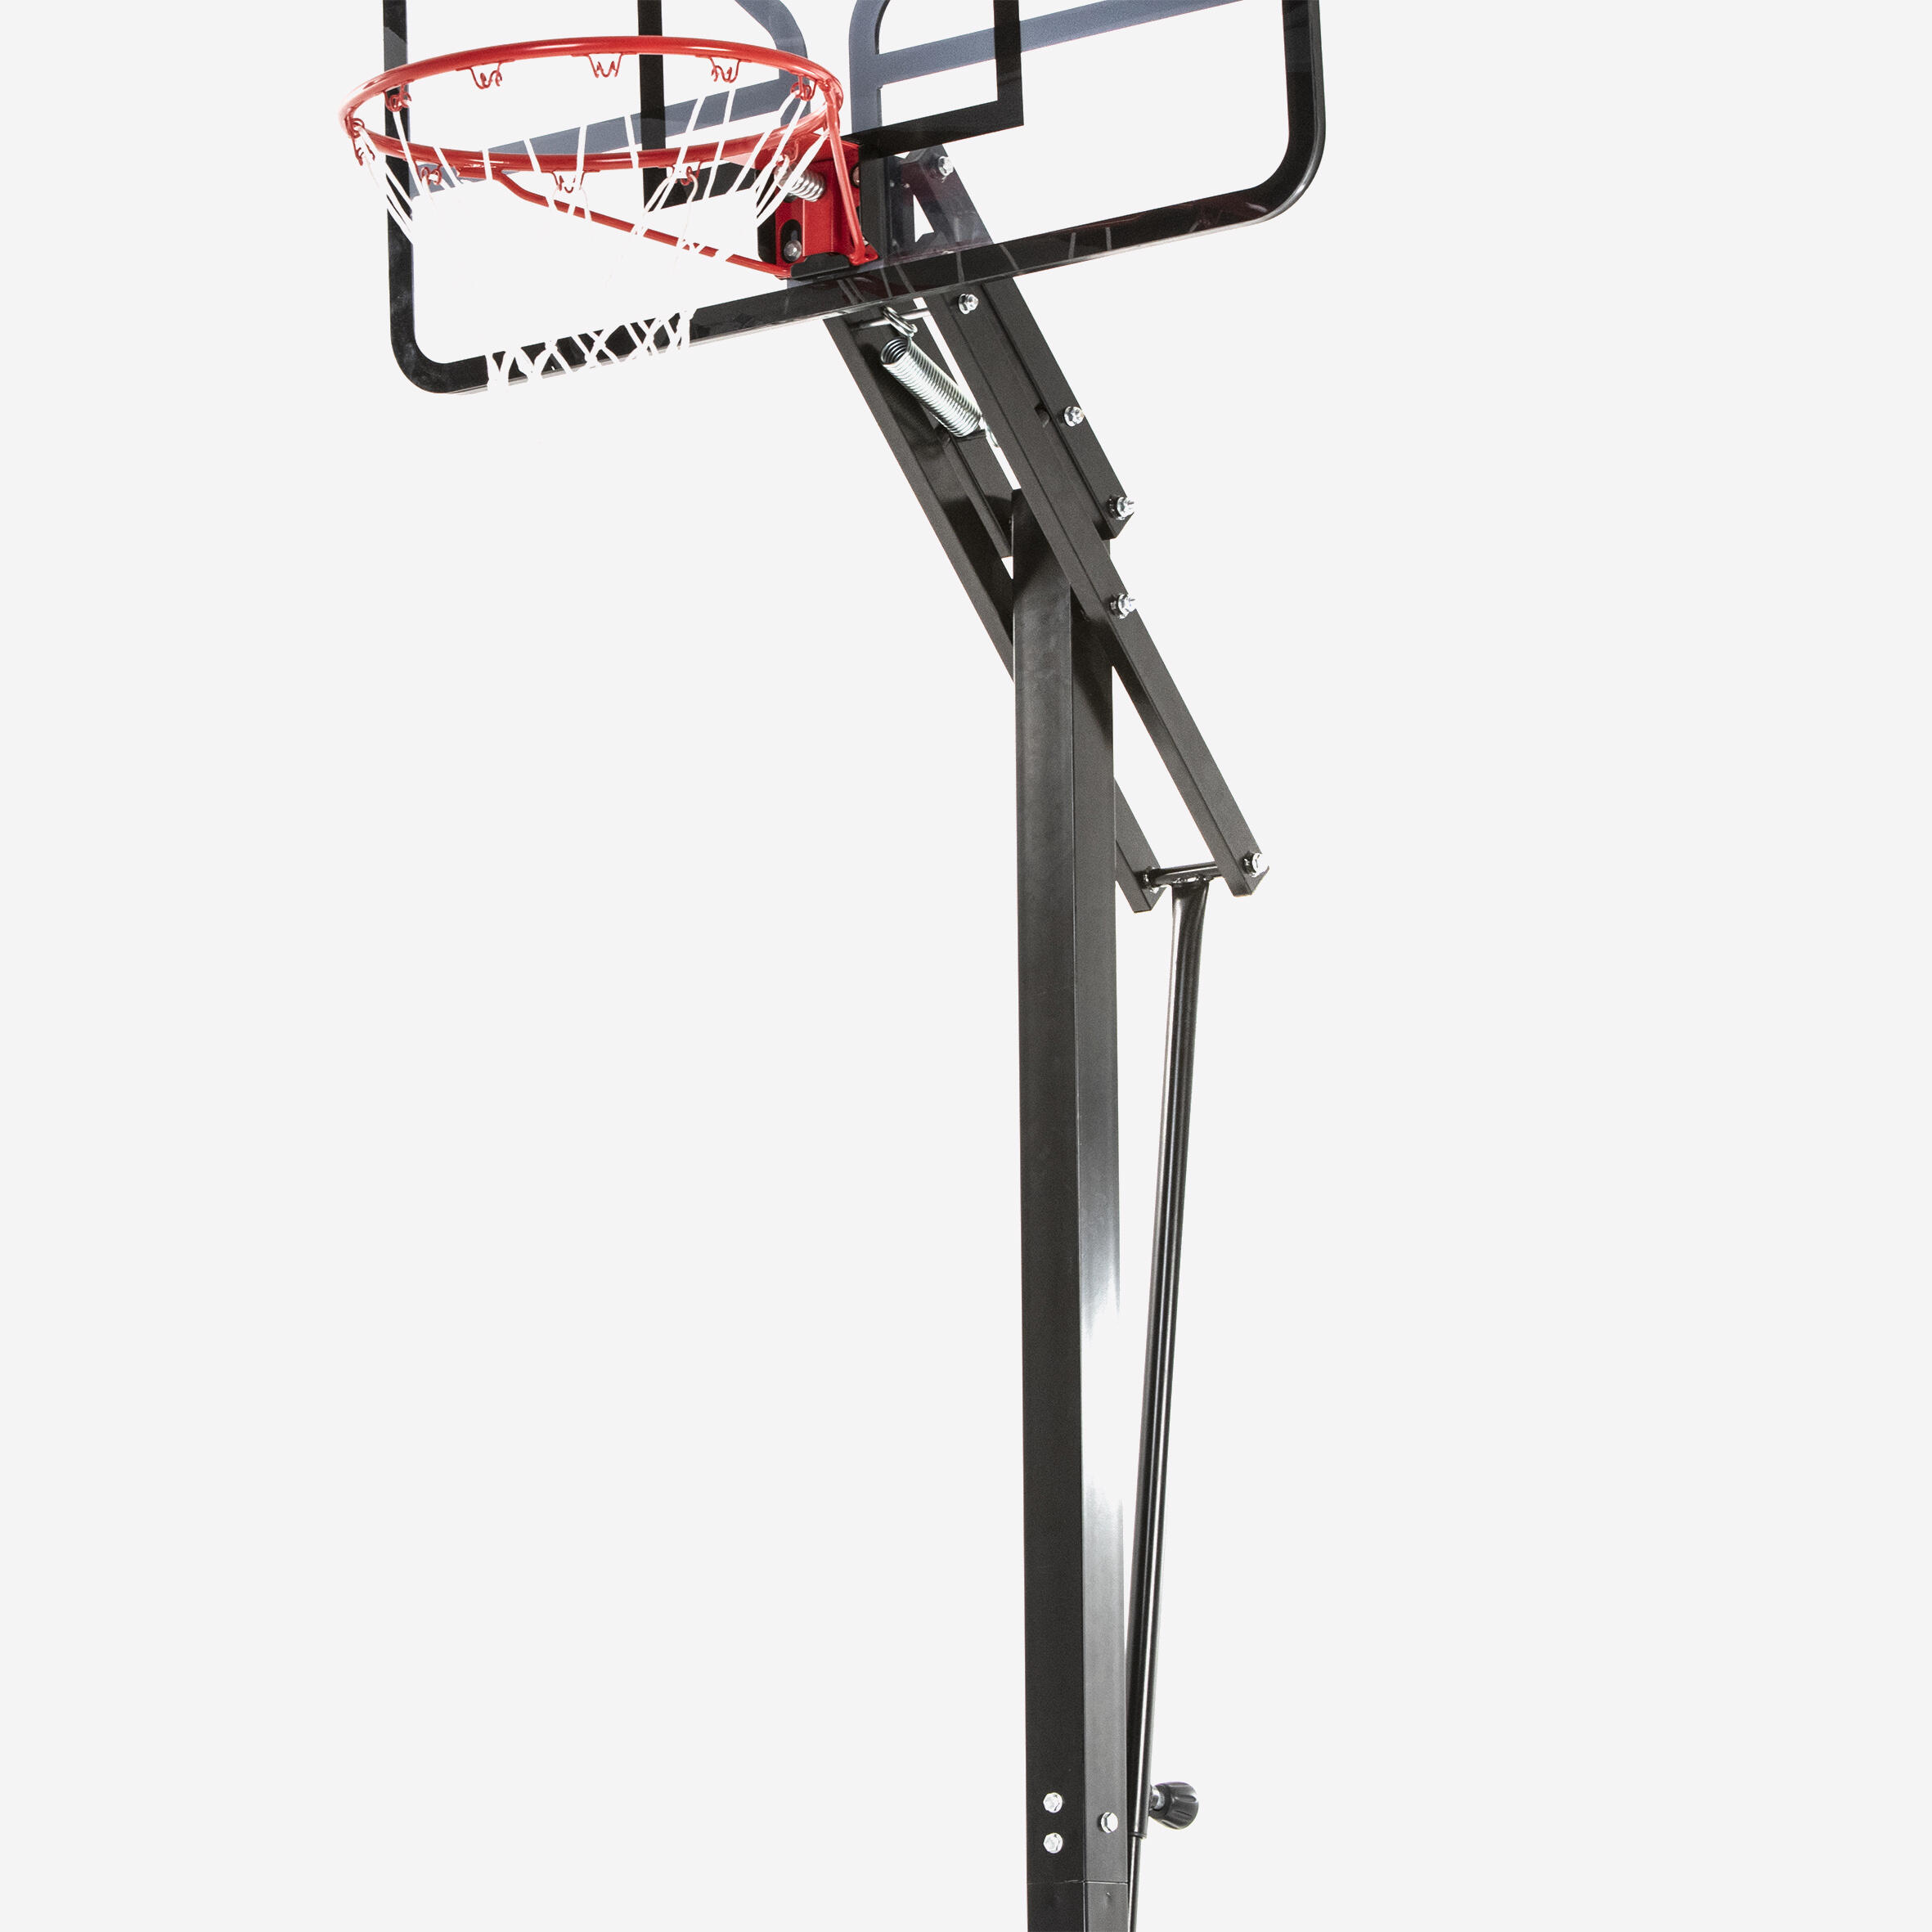 Basketball Hoops & Basketball Systems | Walmart Canada